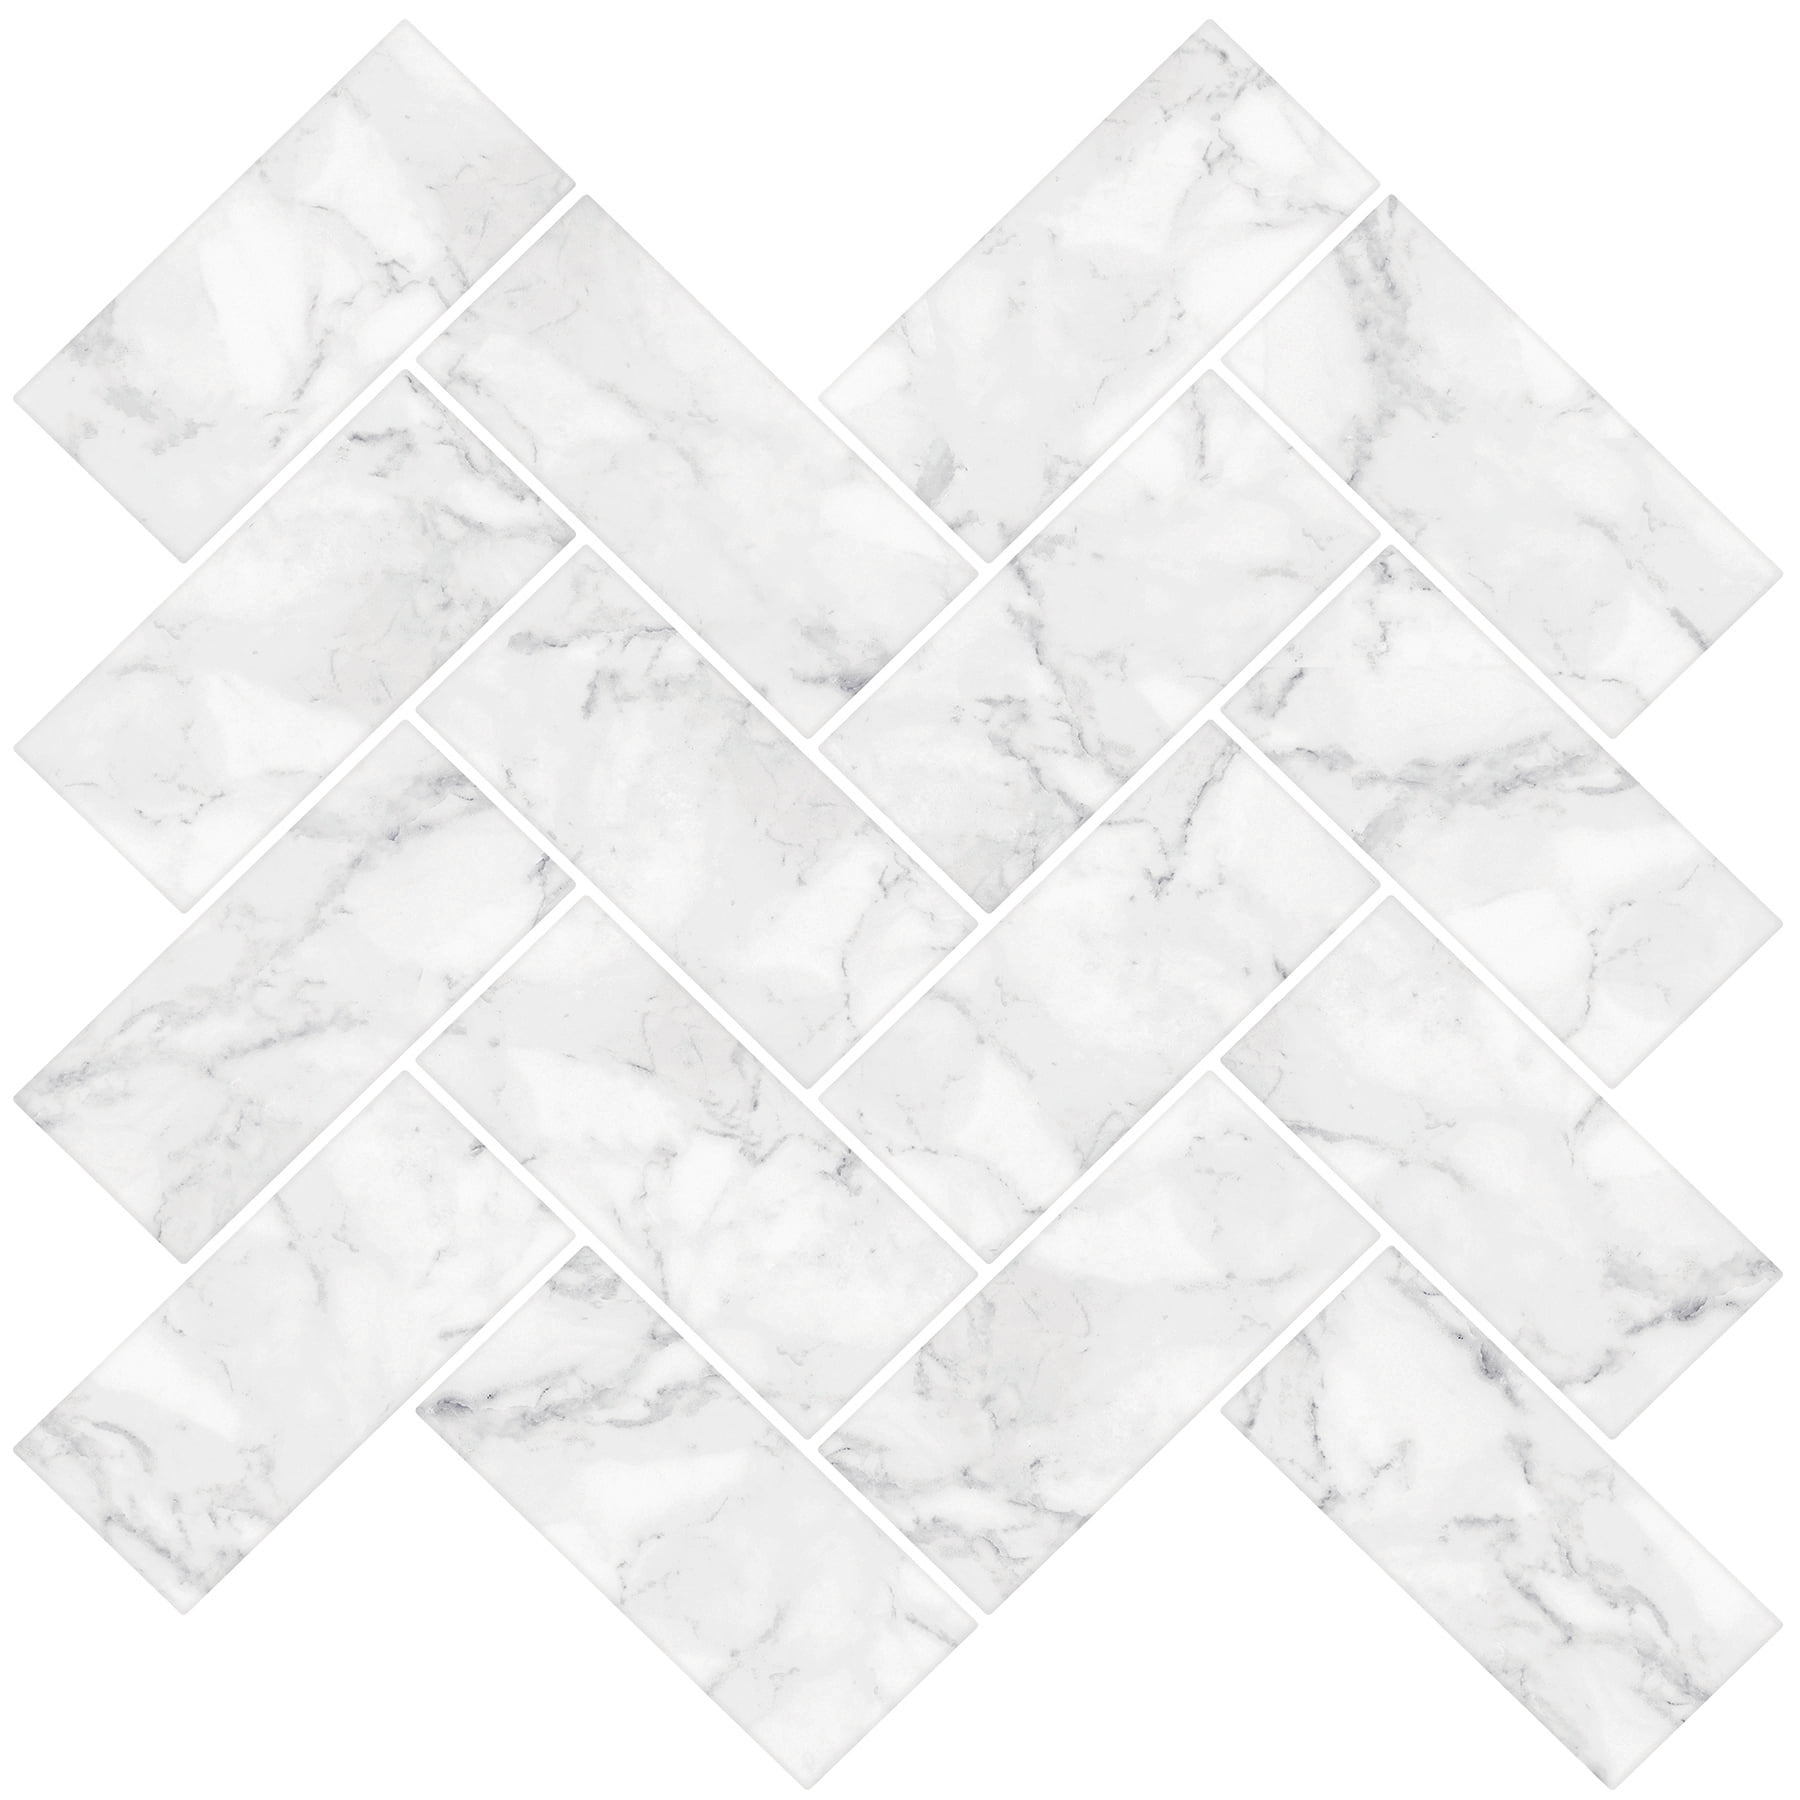 Nh2358 Herringbone Carrara Peel & Stick Backsplash Tiles - White